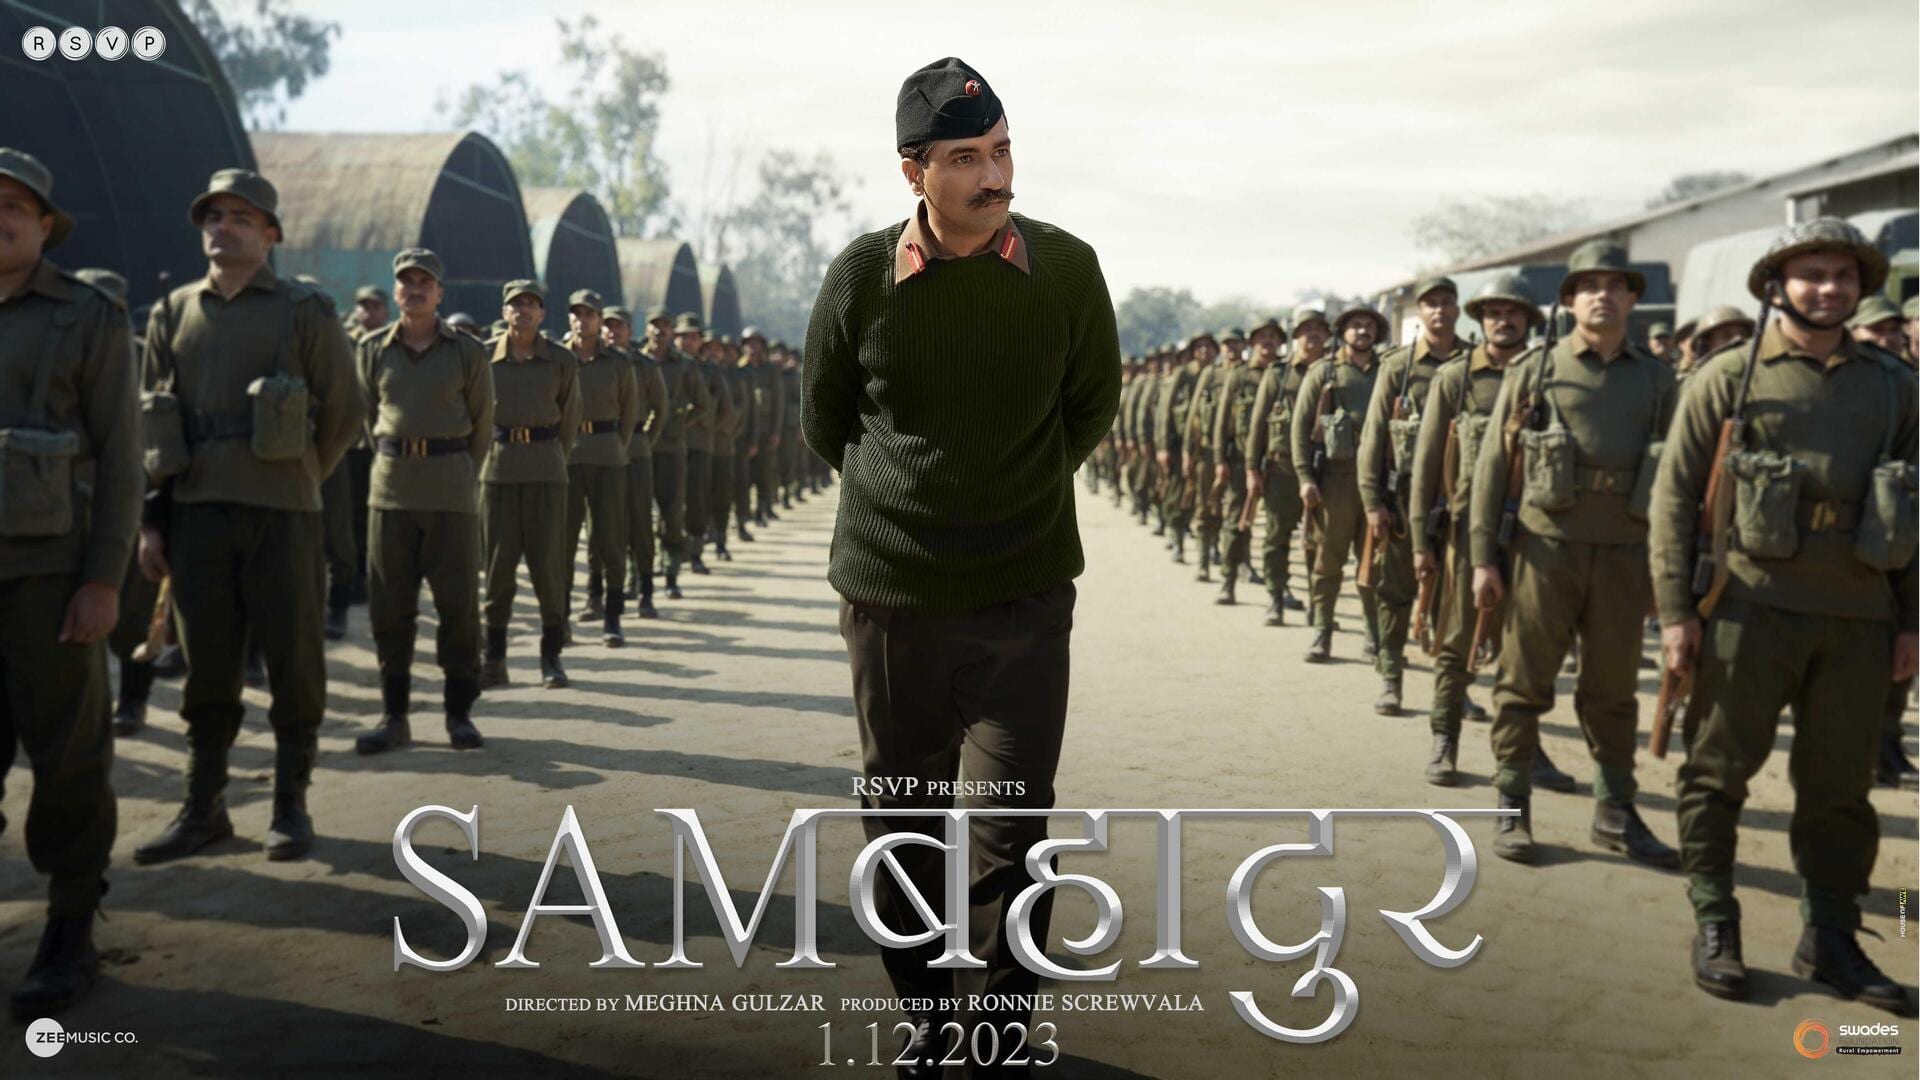 Box office buzz: 'Sam Bahadur' aims to sell 45,000 tickets